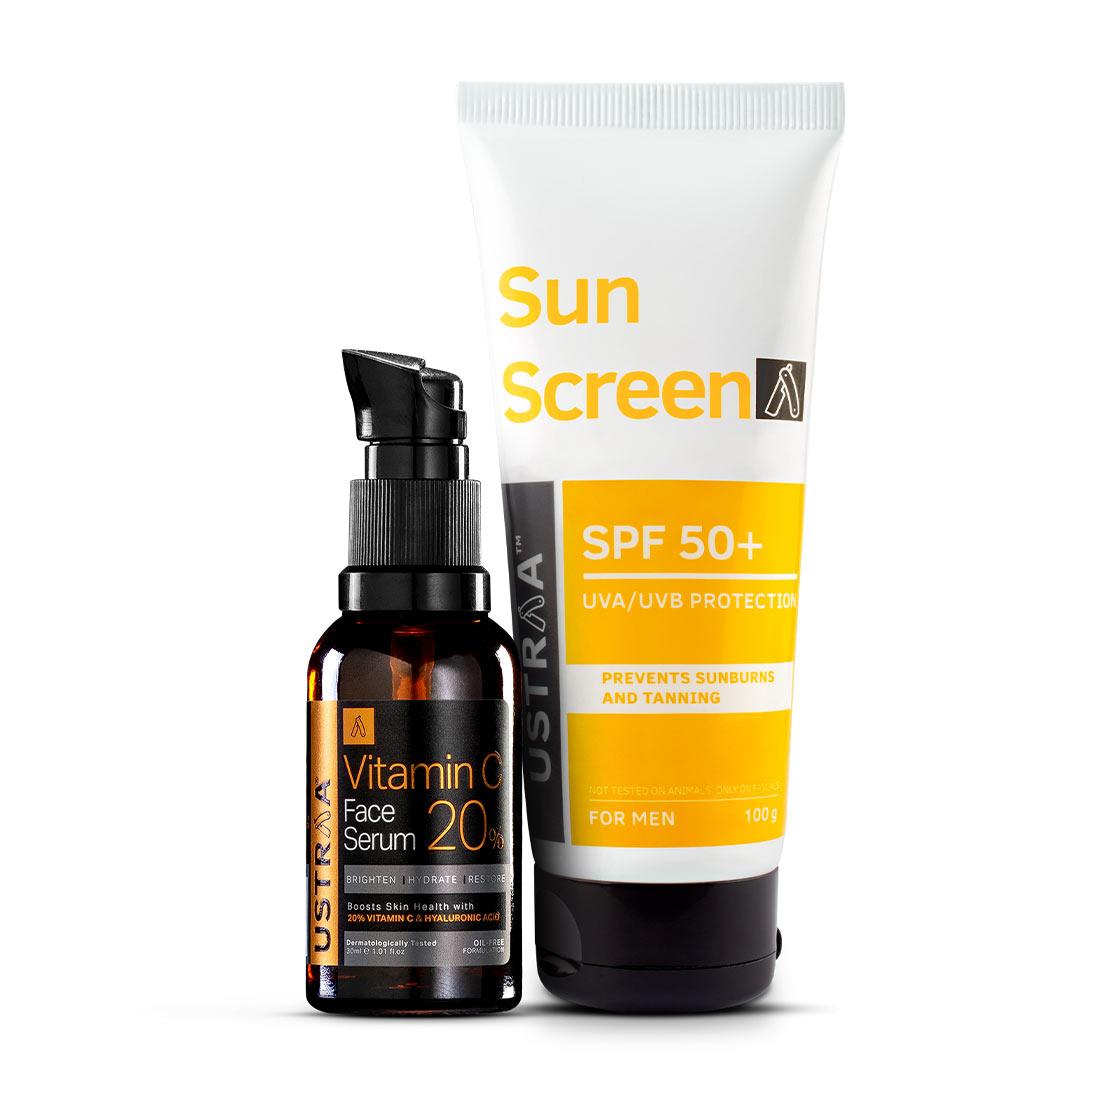 Vitamin C Face Serum & Sunscreen SPF 50+